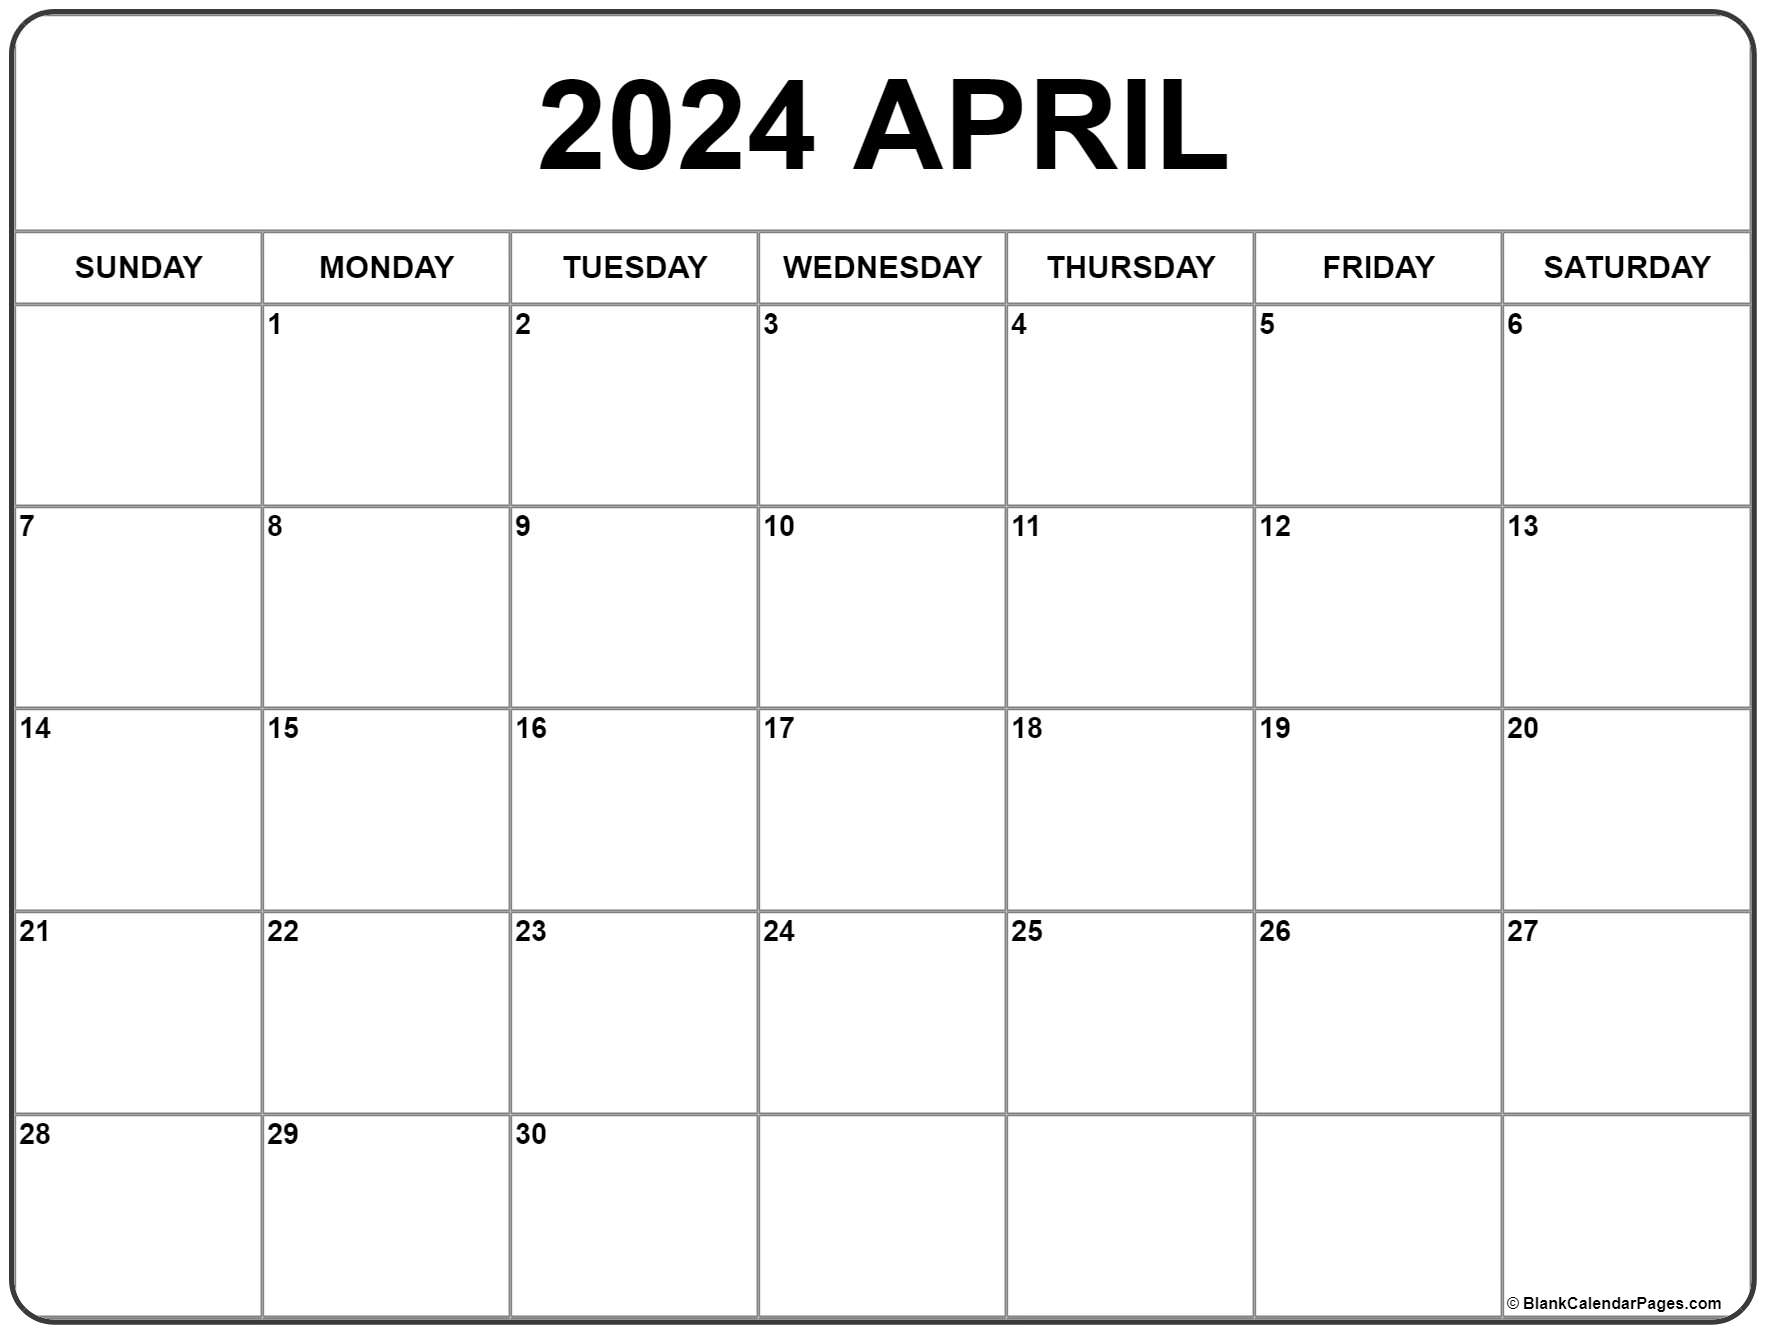 April 2024 Calendar | Free Printable Calendar | January 2024 To May 2024 Calendar